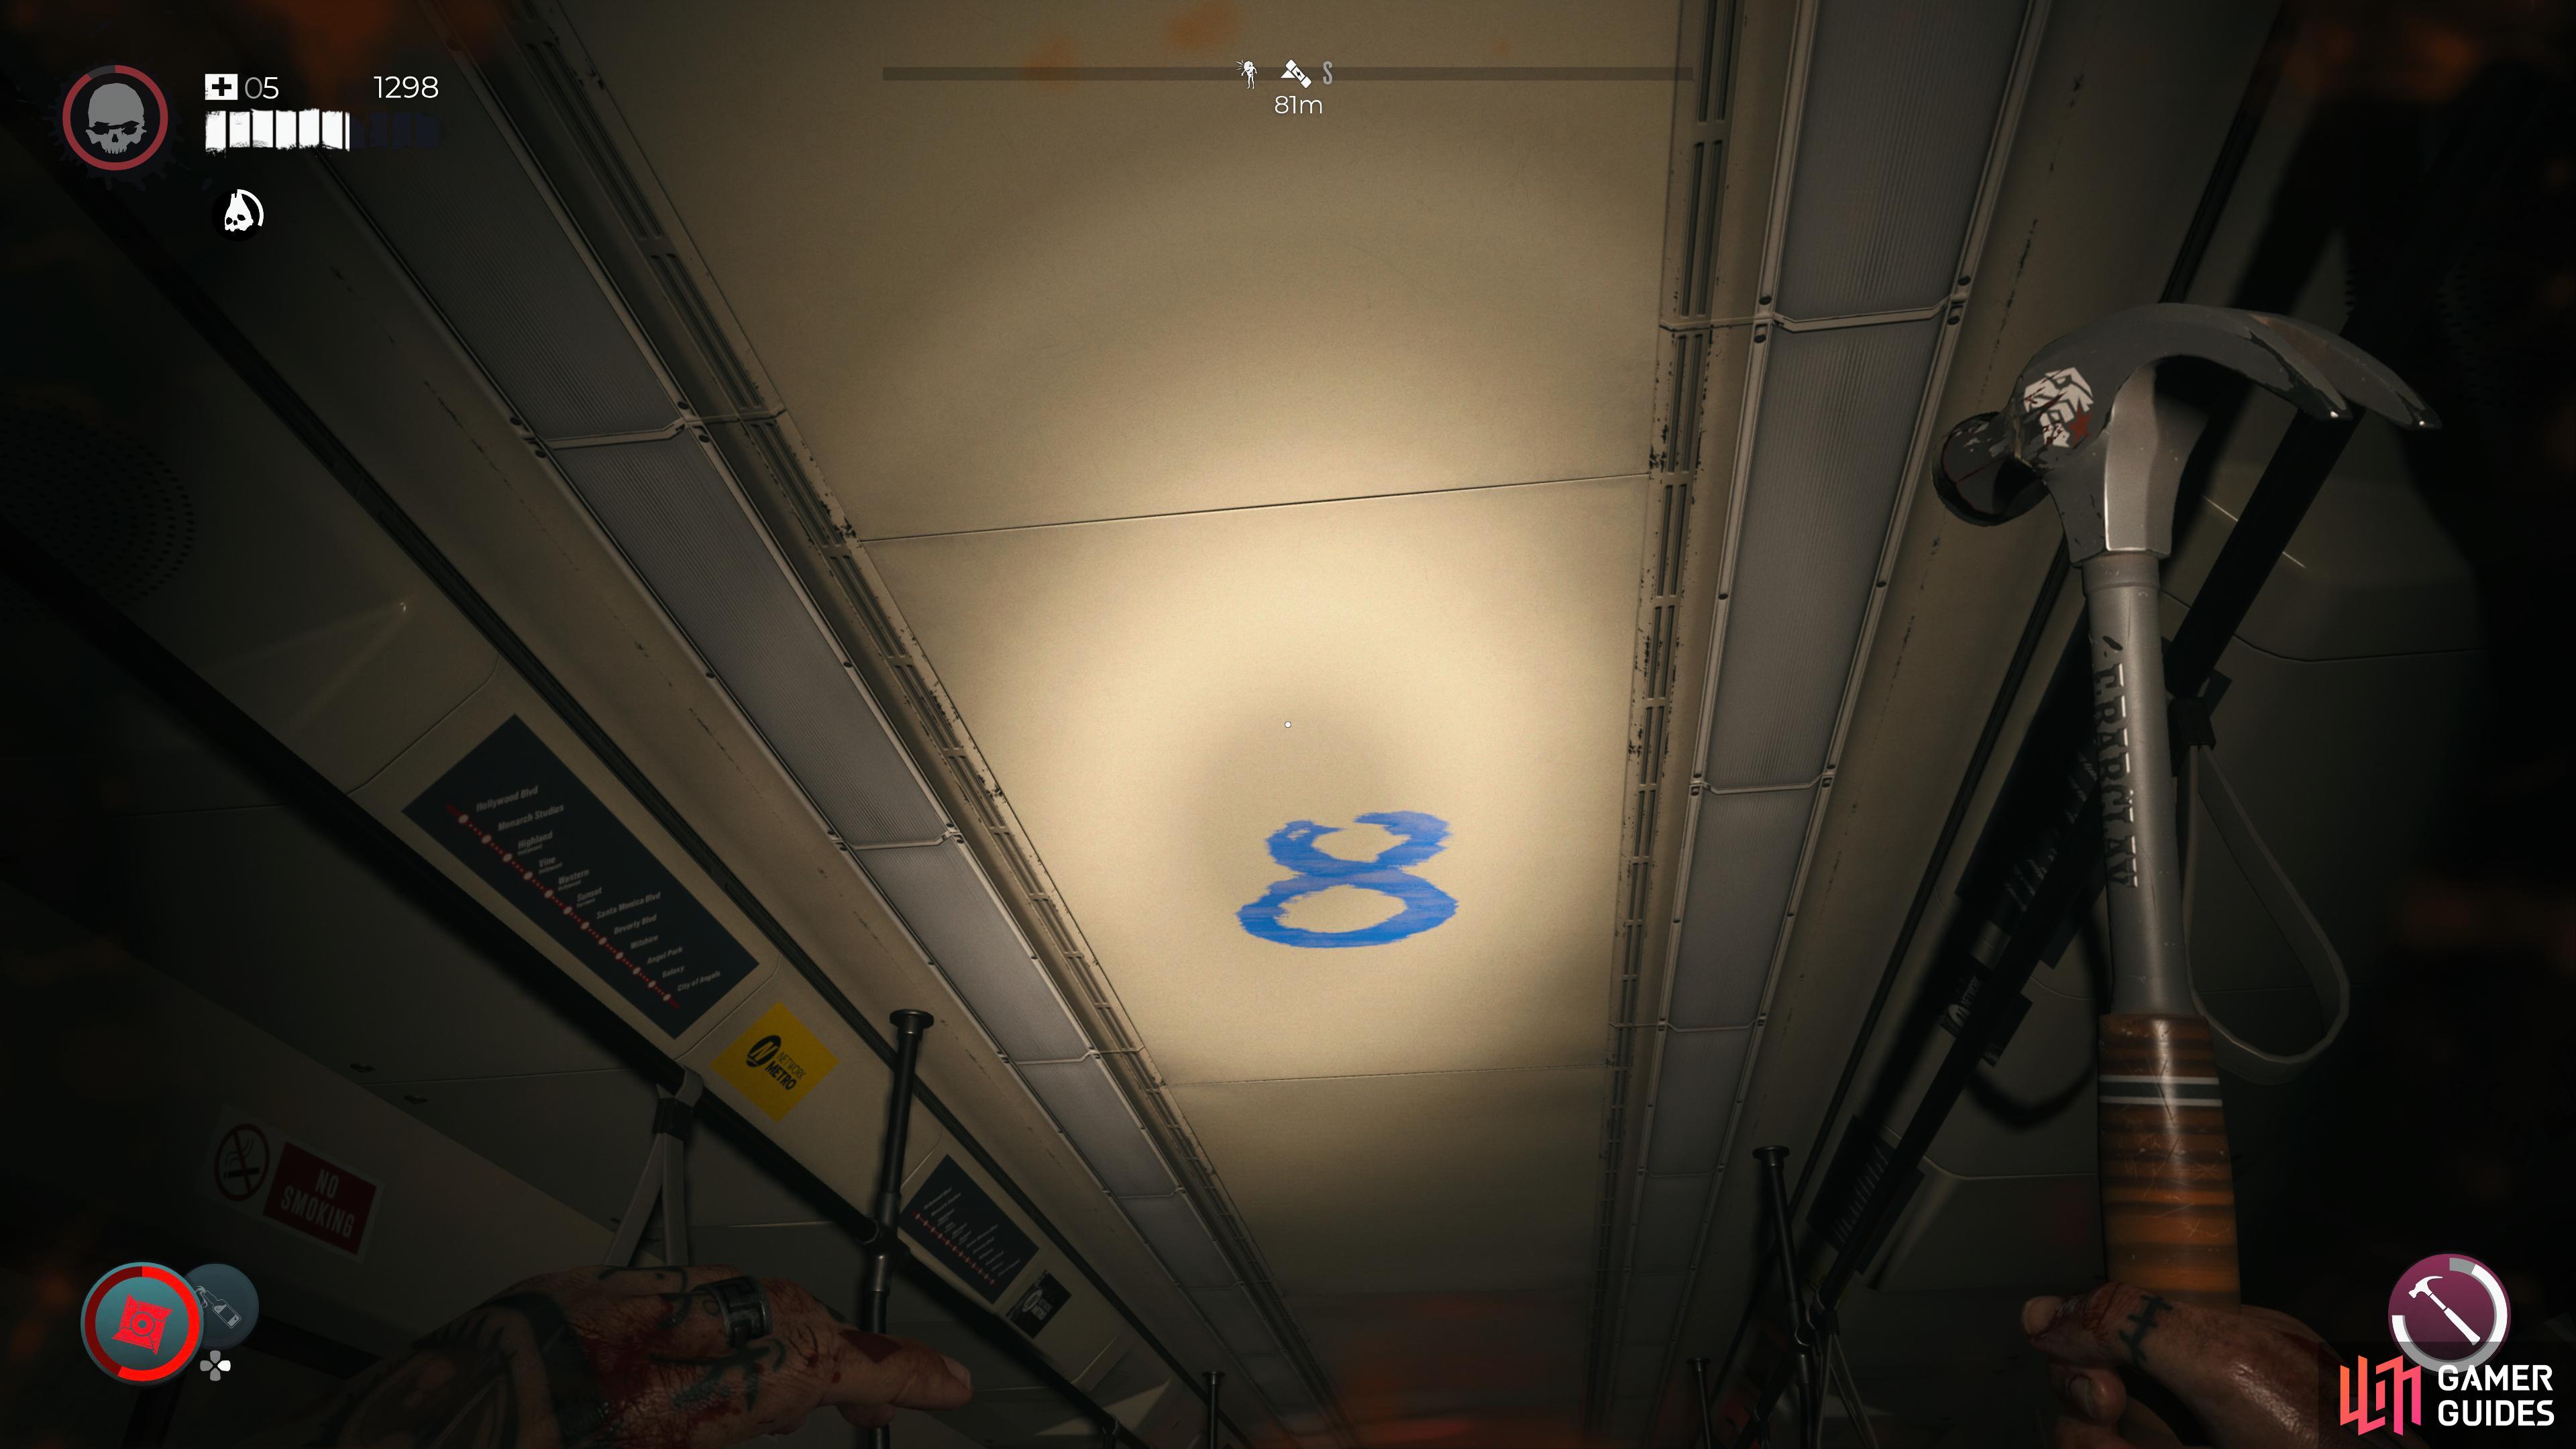 Nadia’s code on a Metro train car ceiling.